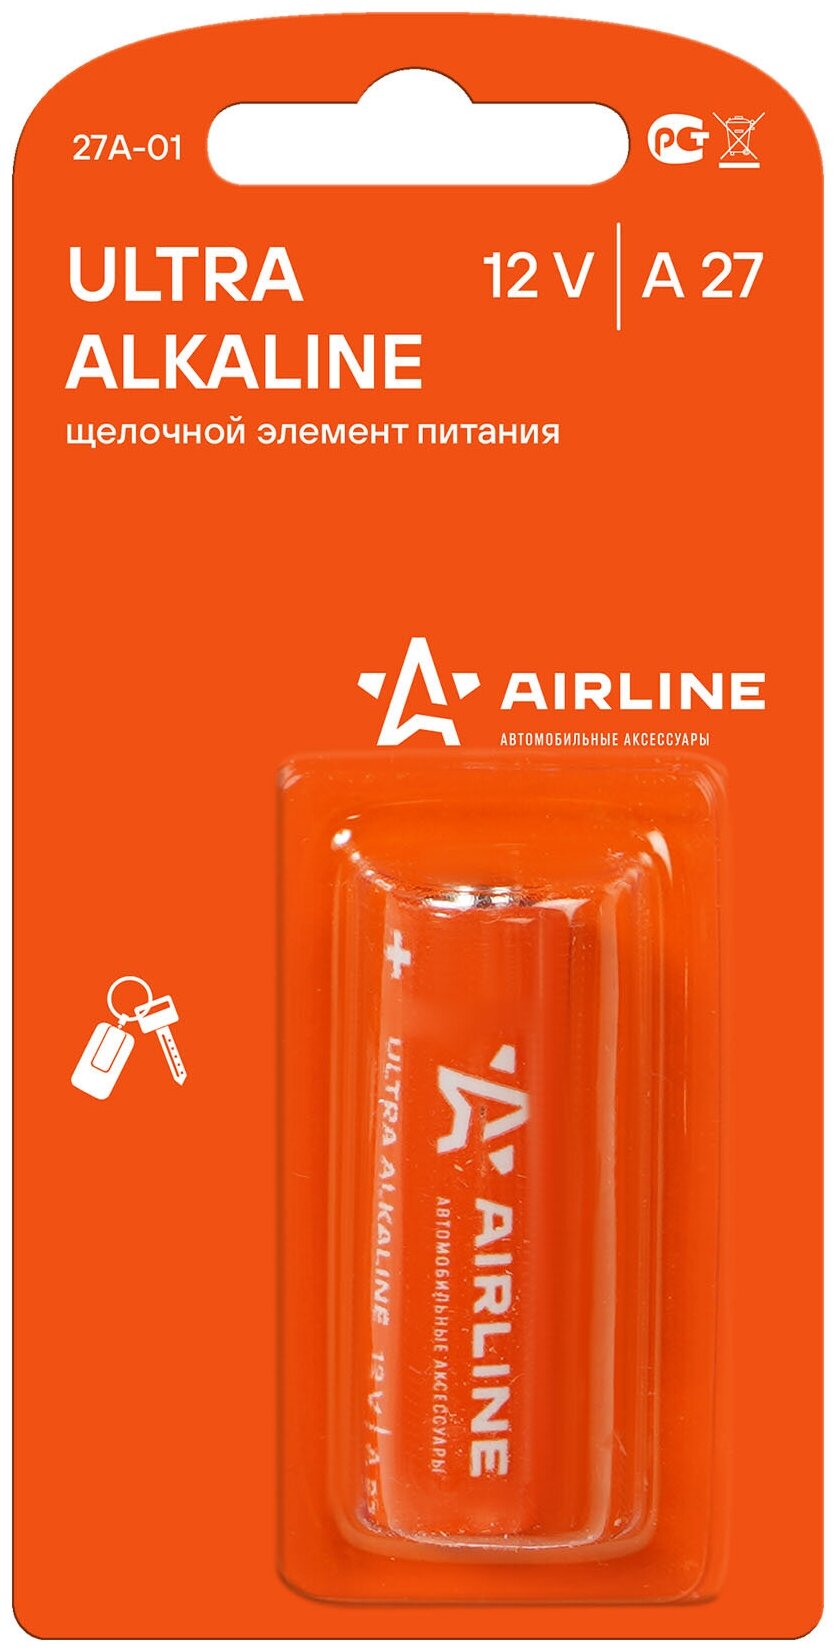 Батарейка A27 12V для брелоков сигнализаций щелочная 1 шт. 27A-01 AIRLINE